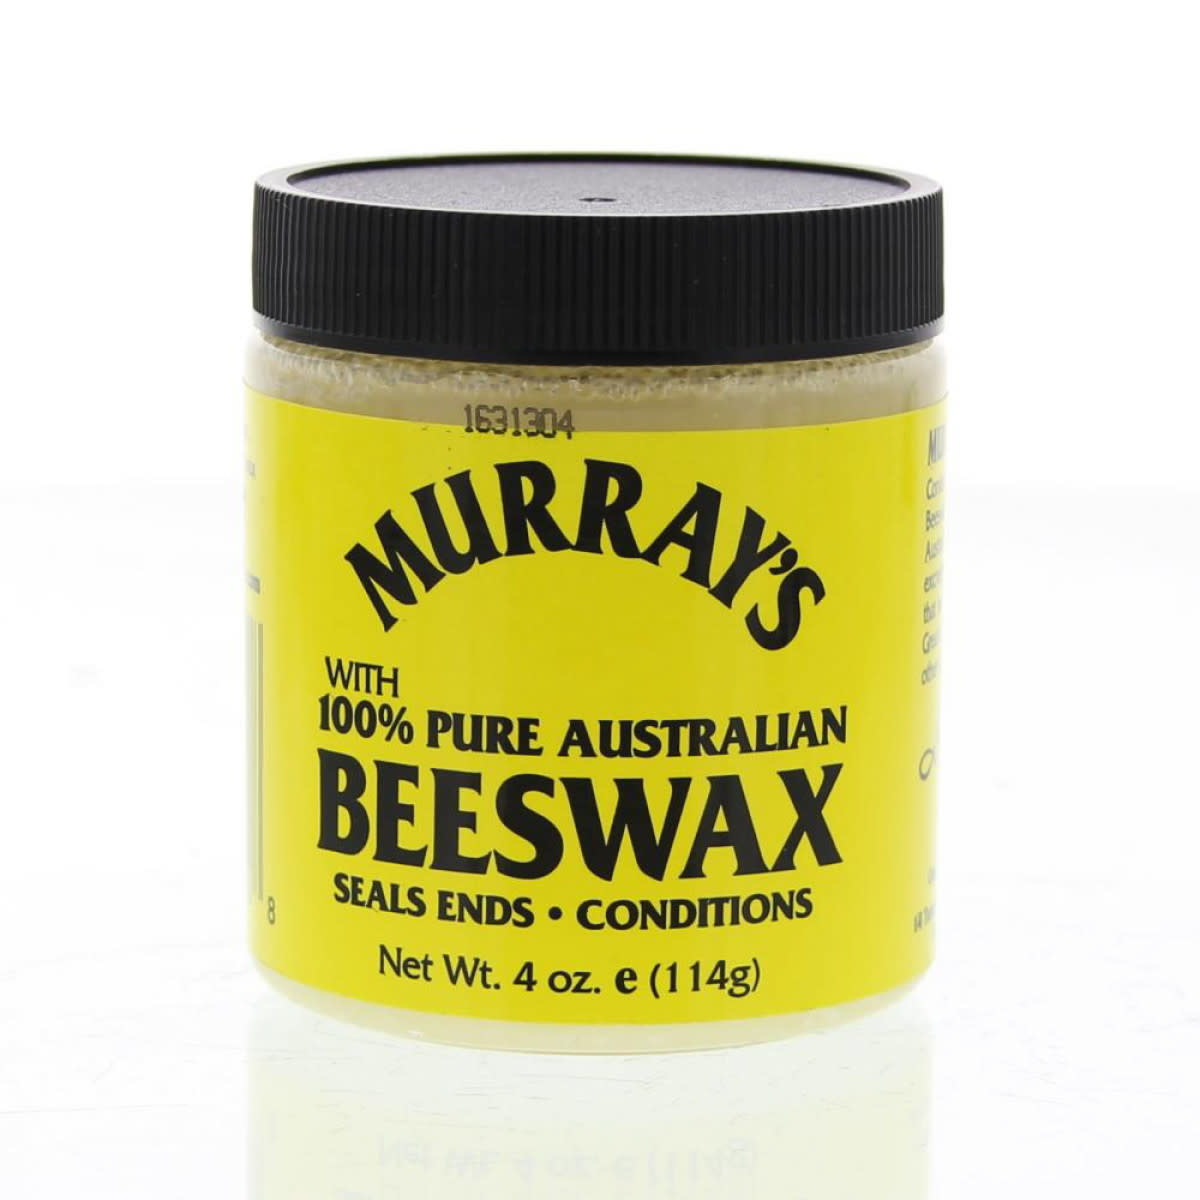 Murray's Beeswax 4oz